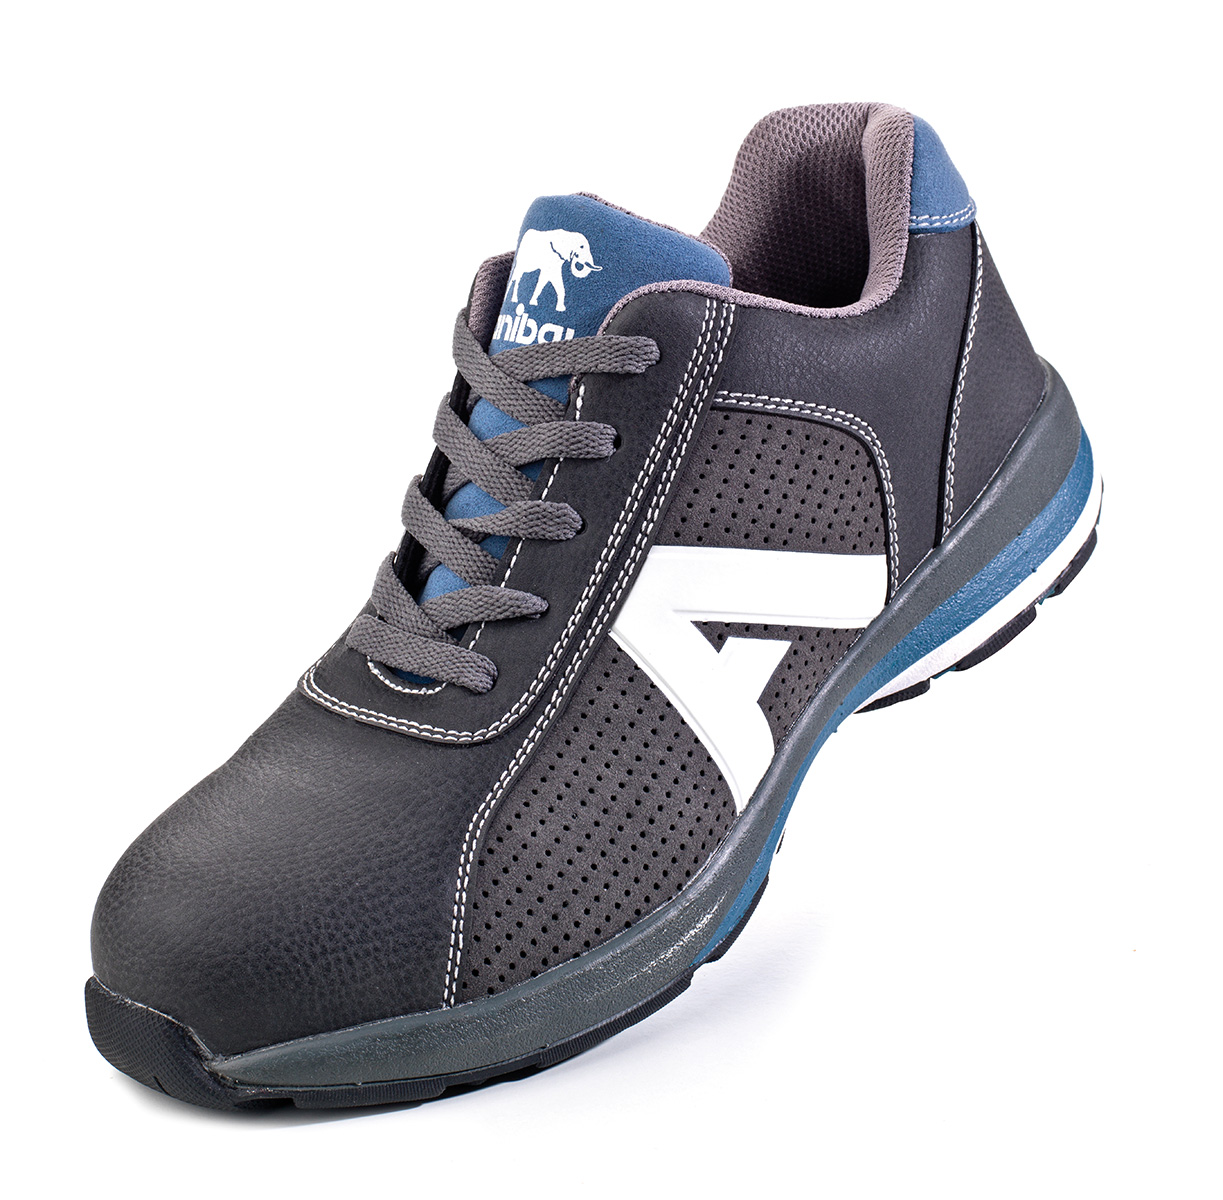 1688-ZO Safety Footwear Sporty  Mod. “OLIMPIA”
Nobuk microfiber leather shoe in S1P. Dual densityEVA/SRC sole.